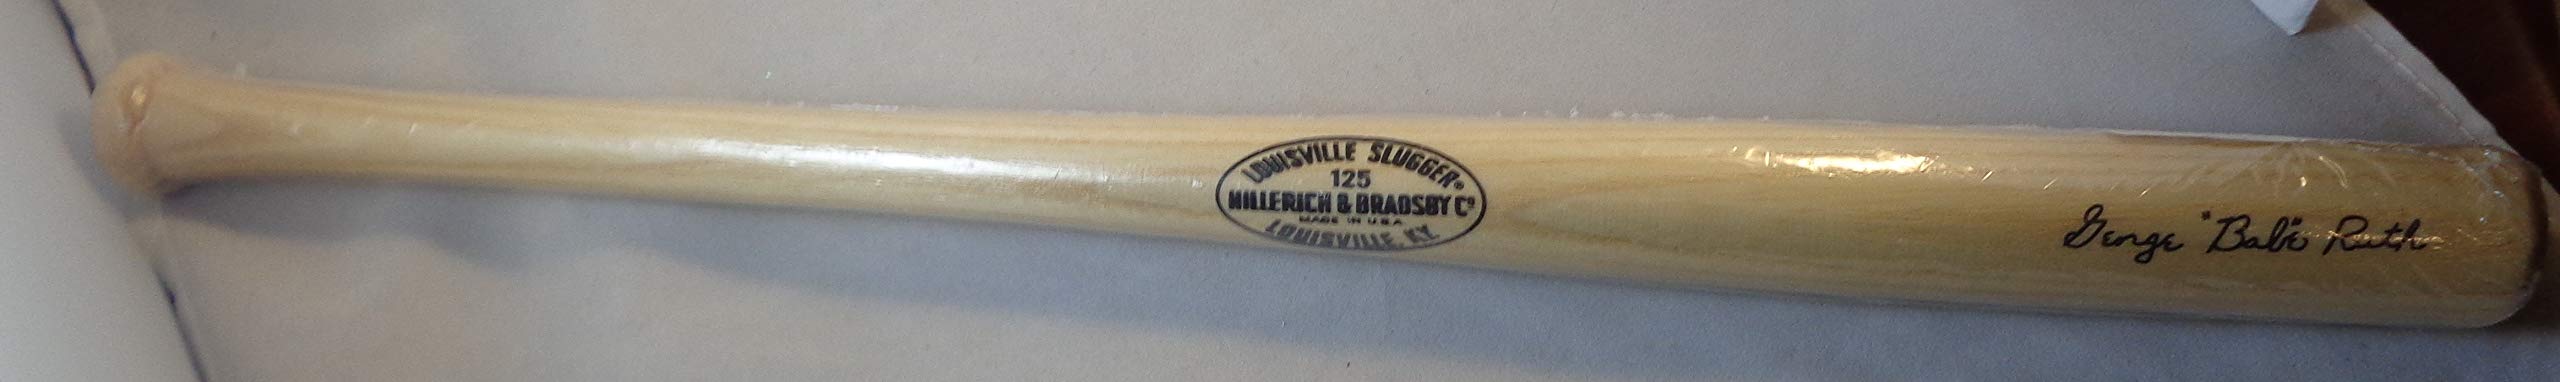 Louisville Slugger Mini Souvenir Bat 17 Imprinted Babe Ruth Signature